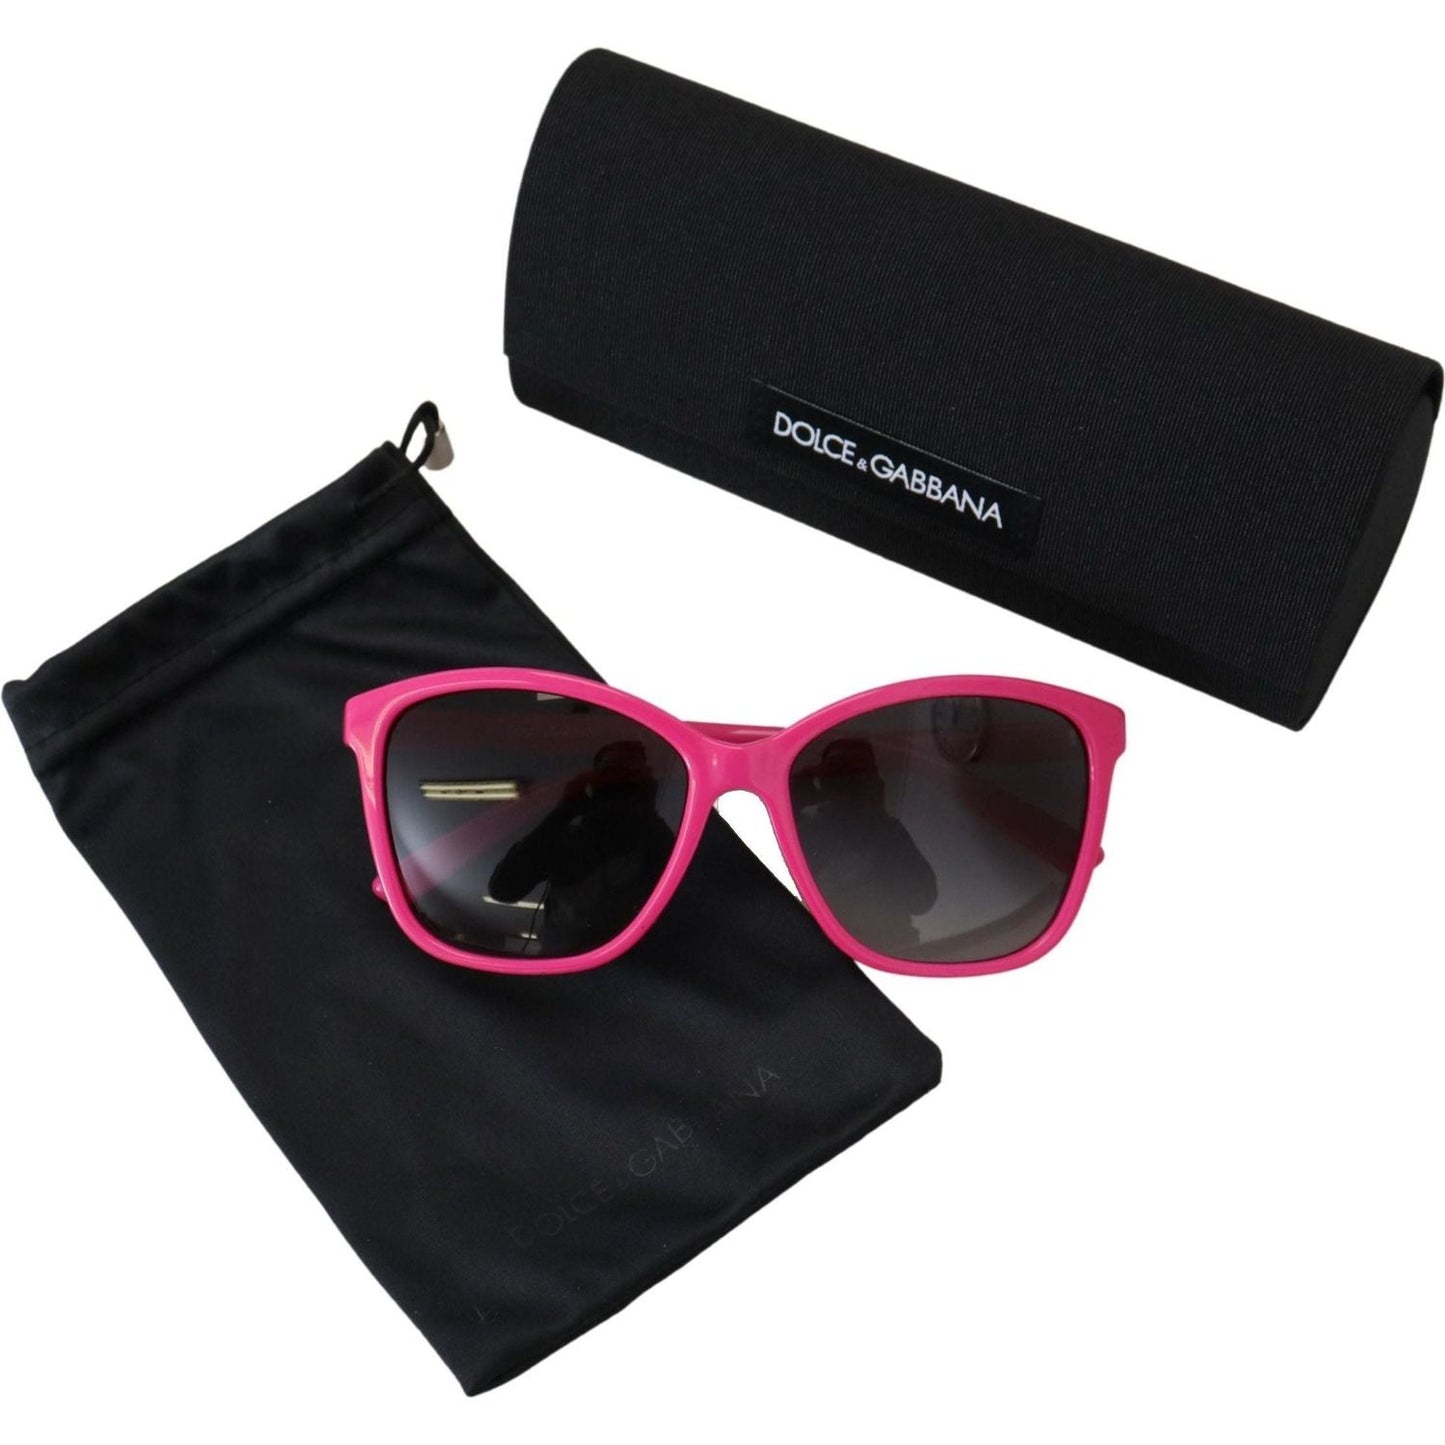 Dolce & Gabbana Elegant Pink Round Sunglasses for Women pink-acetate-frame-round-shades-dg4170m-women-sunglasses IMG_4613-1-9a04b9c0-45f.jpg